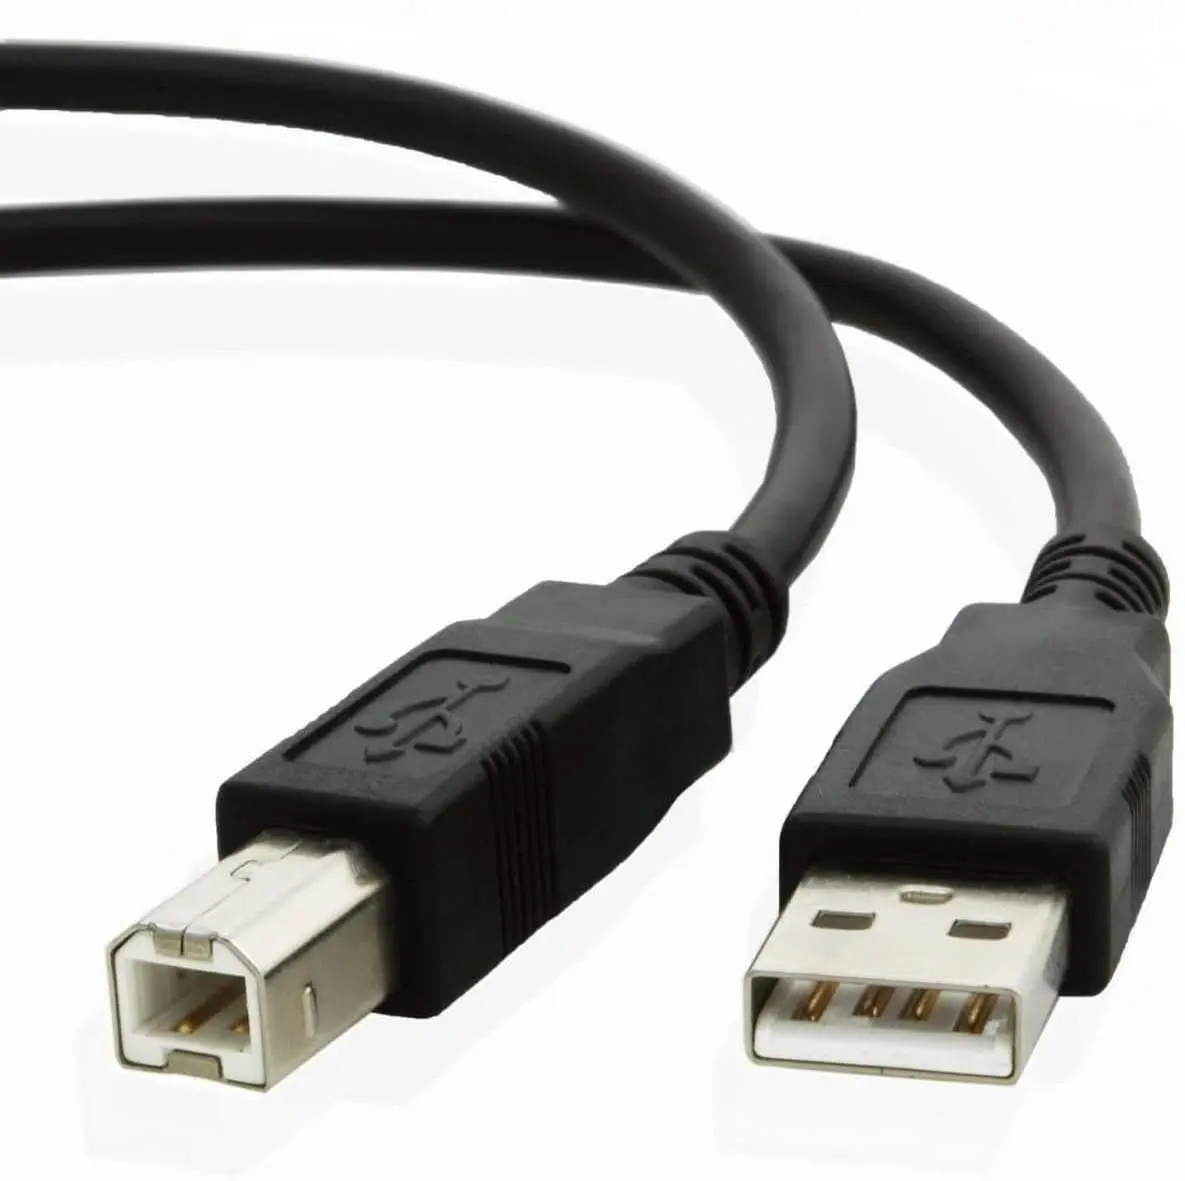 USB2.0 10FT Data Transfer Host Cable Cord For USB Cable For Akai MPK25 MPK49 MPK61 MPK88 Professional MIDI Keyboard PC Cord